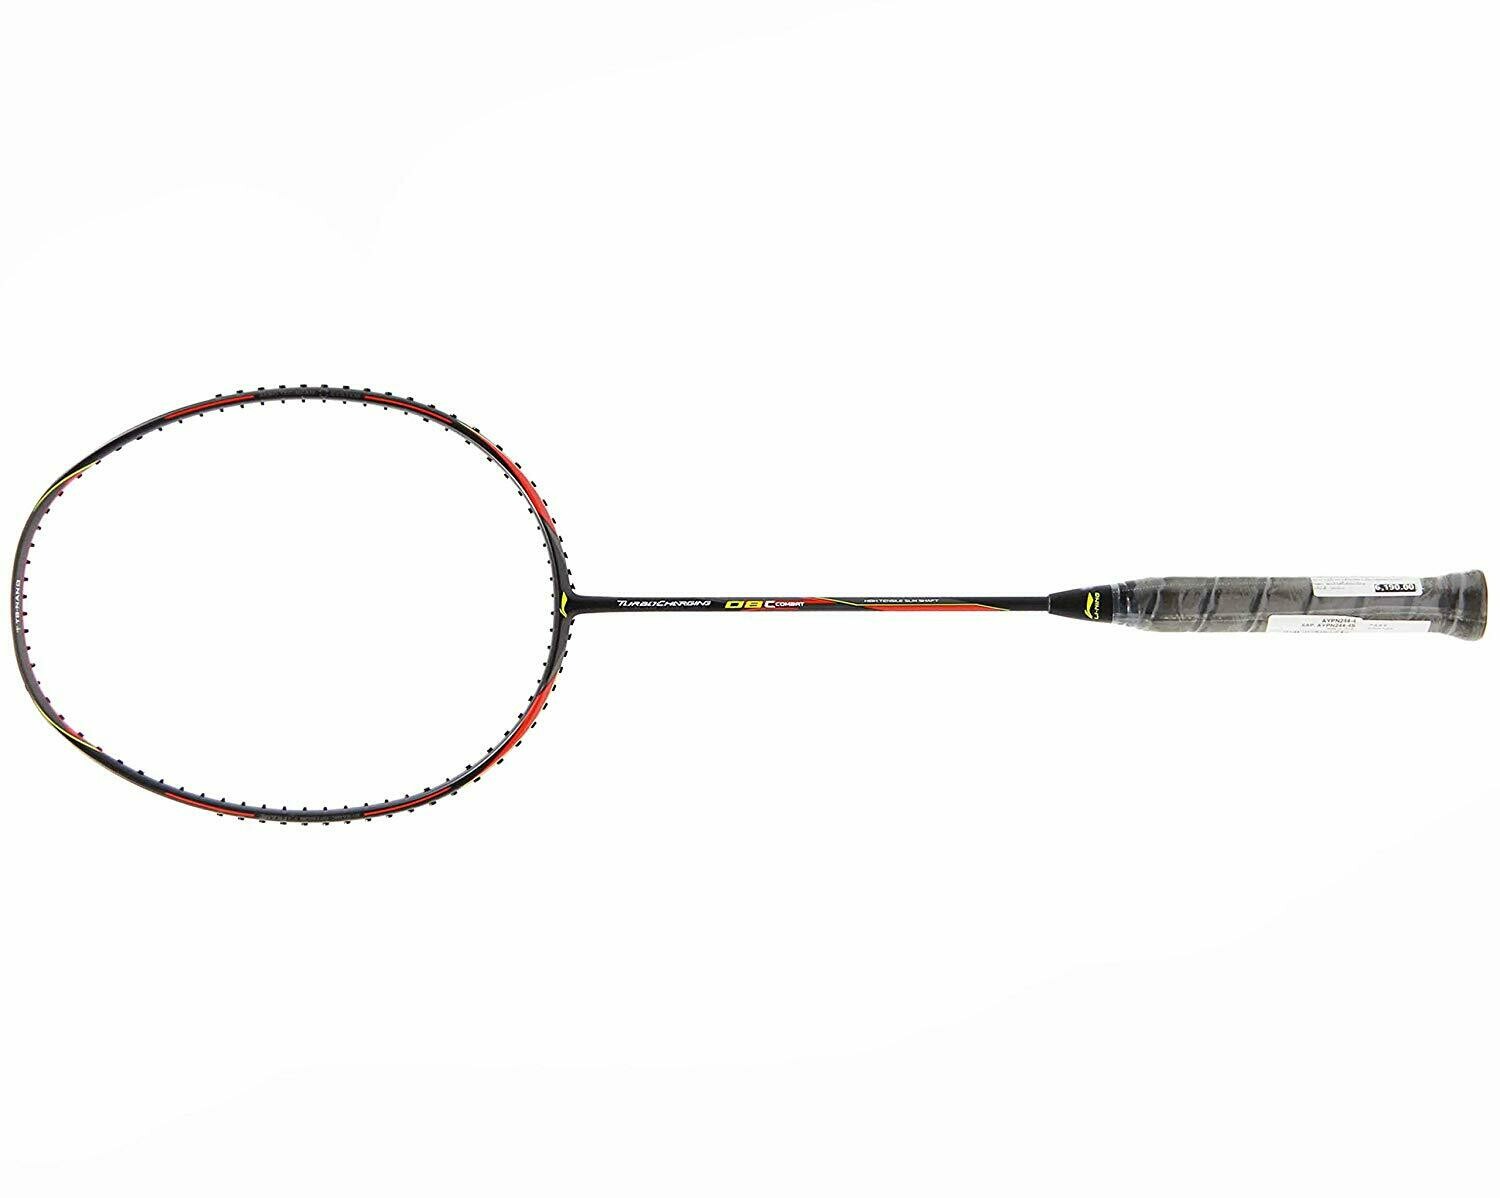 LI-NING Turbo Charging 08C Combat Badminton Racquet